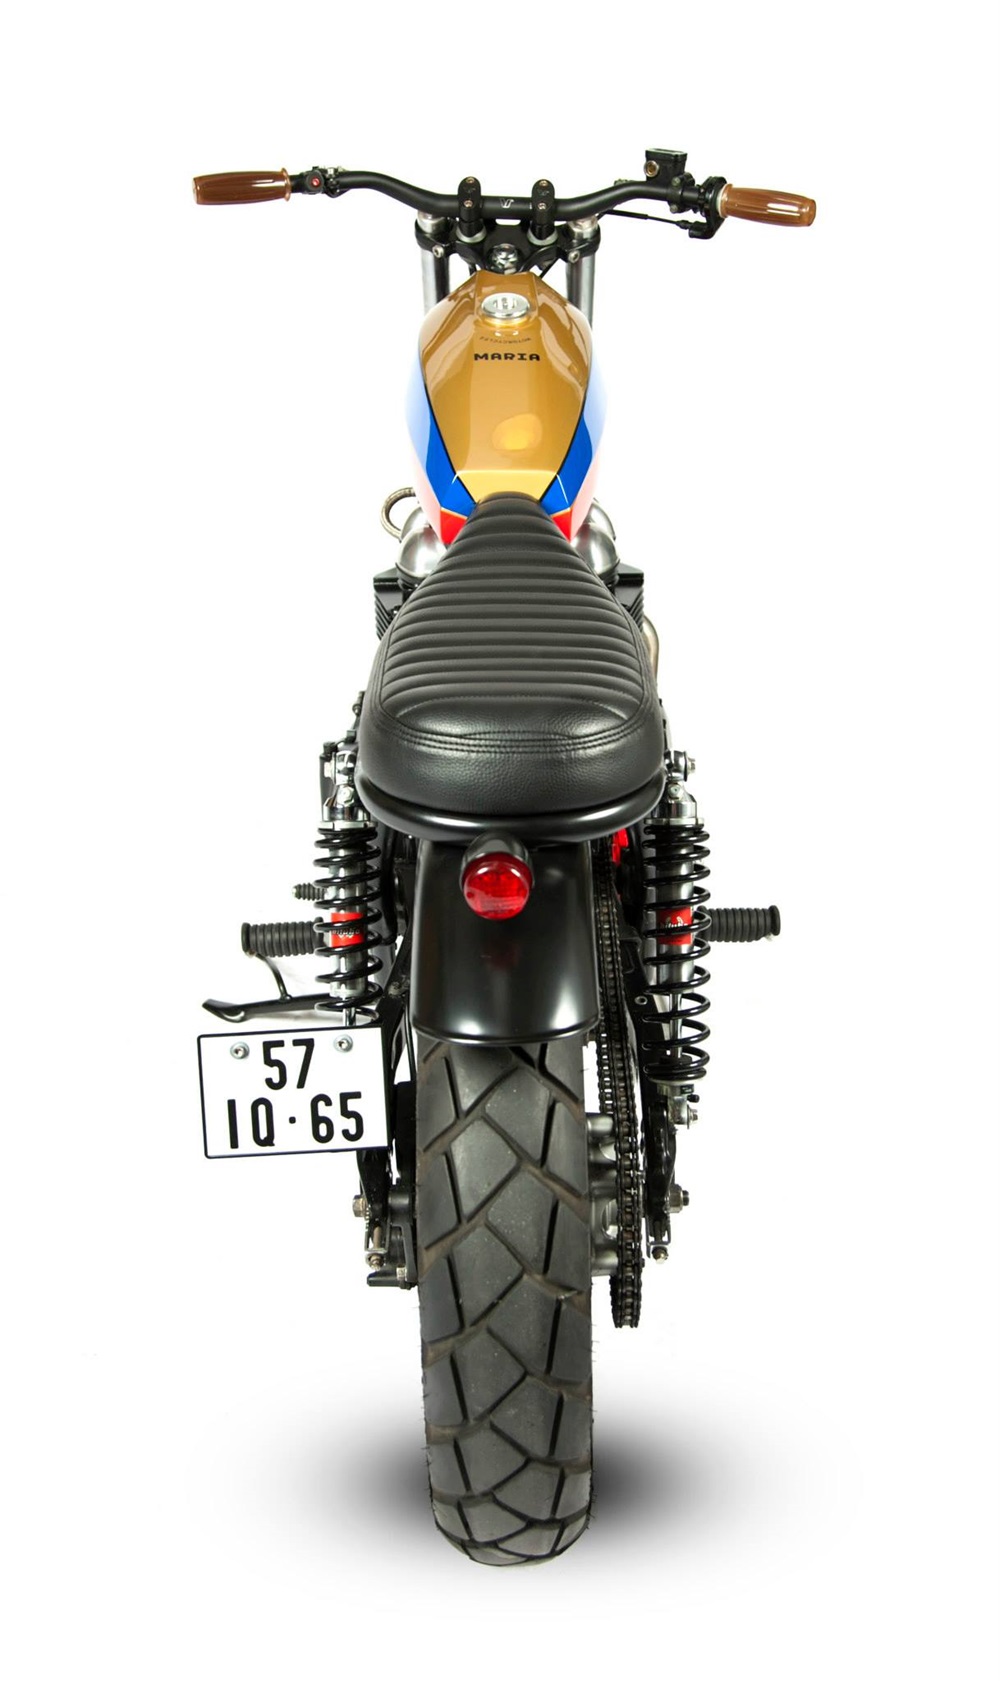 Кастом Maria Motorcycles Skilly Kid на базе Triumph Bonneville